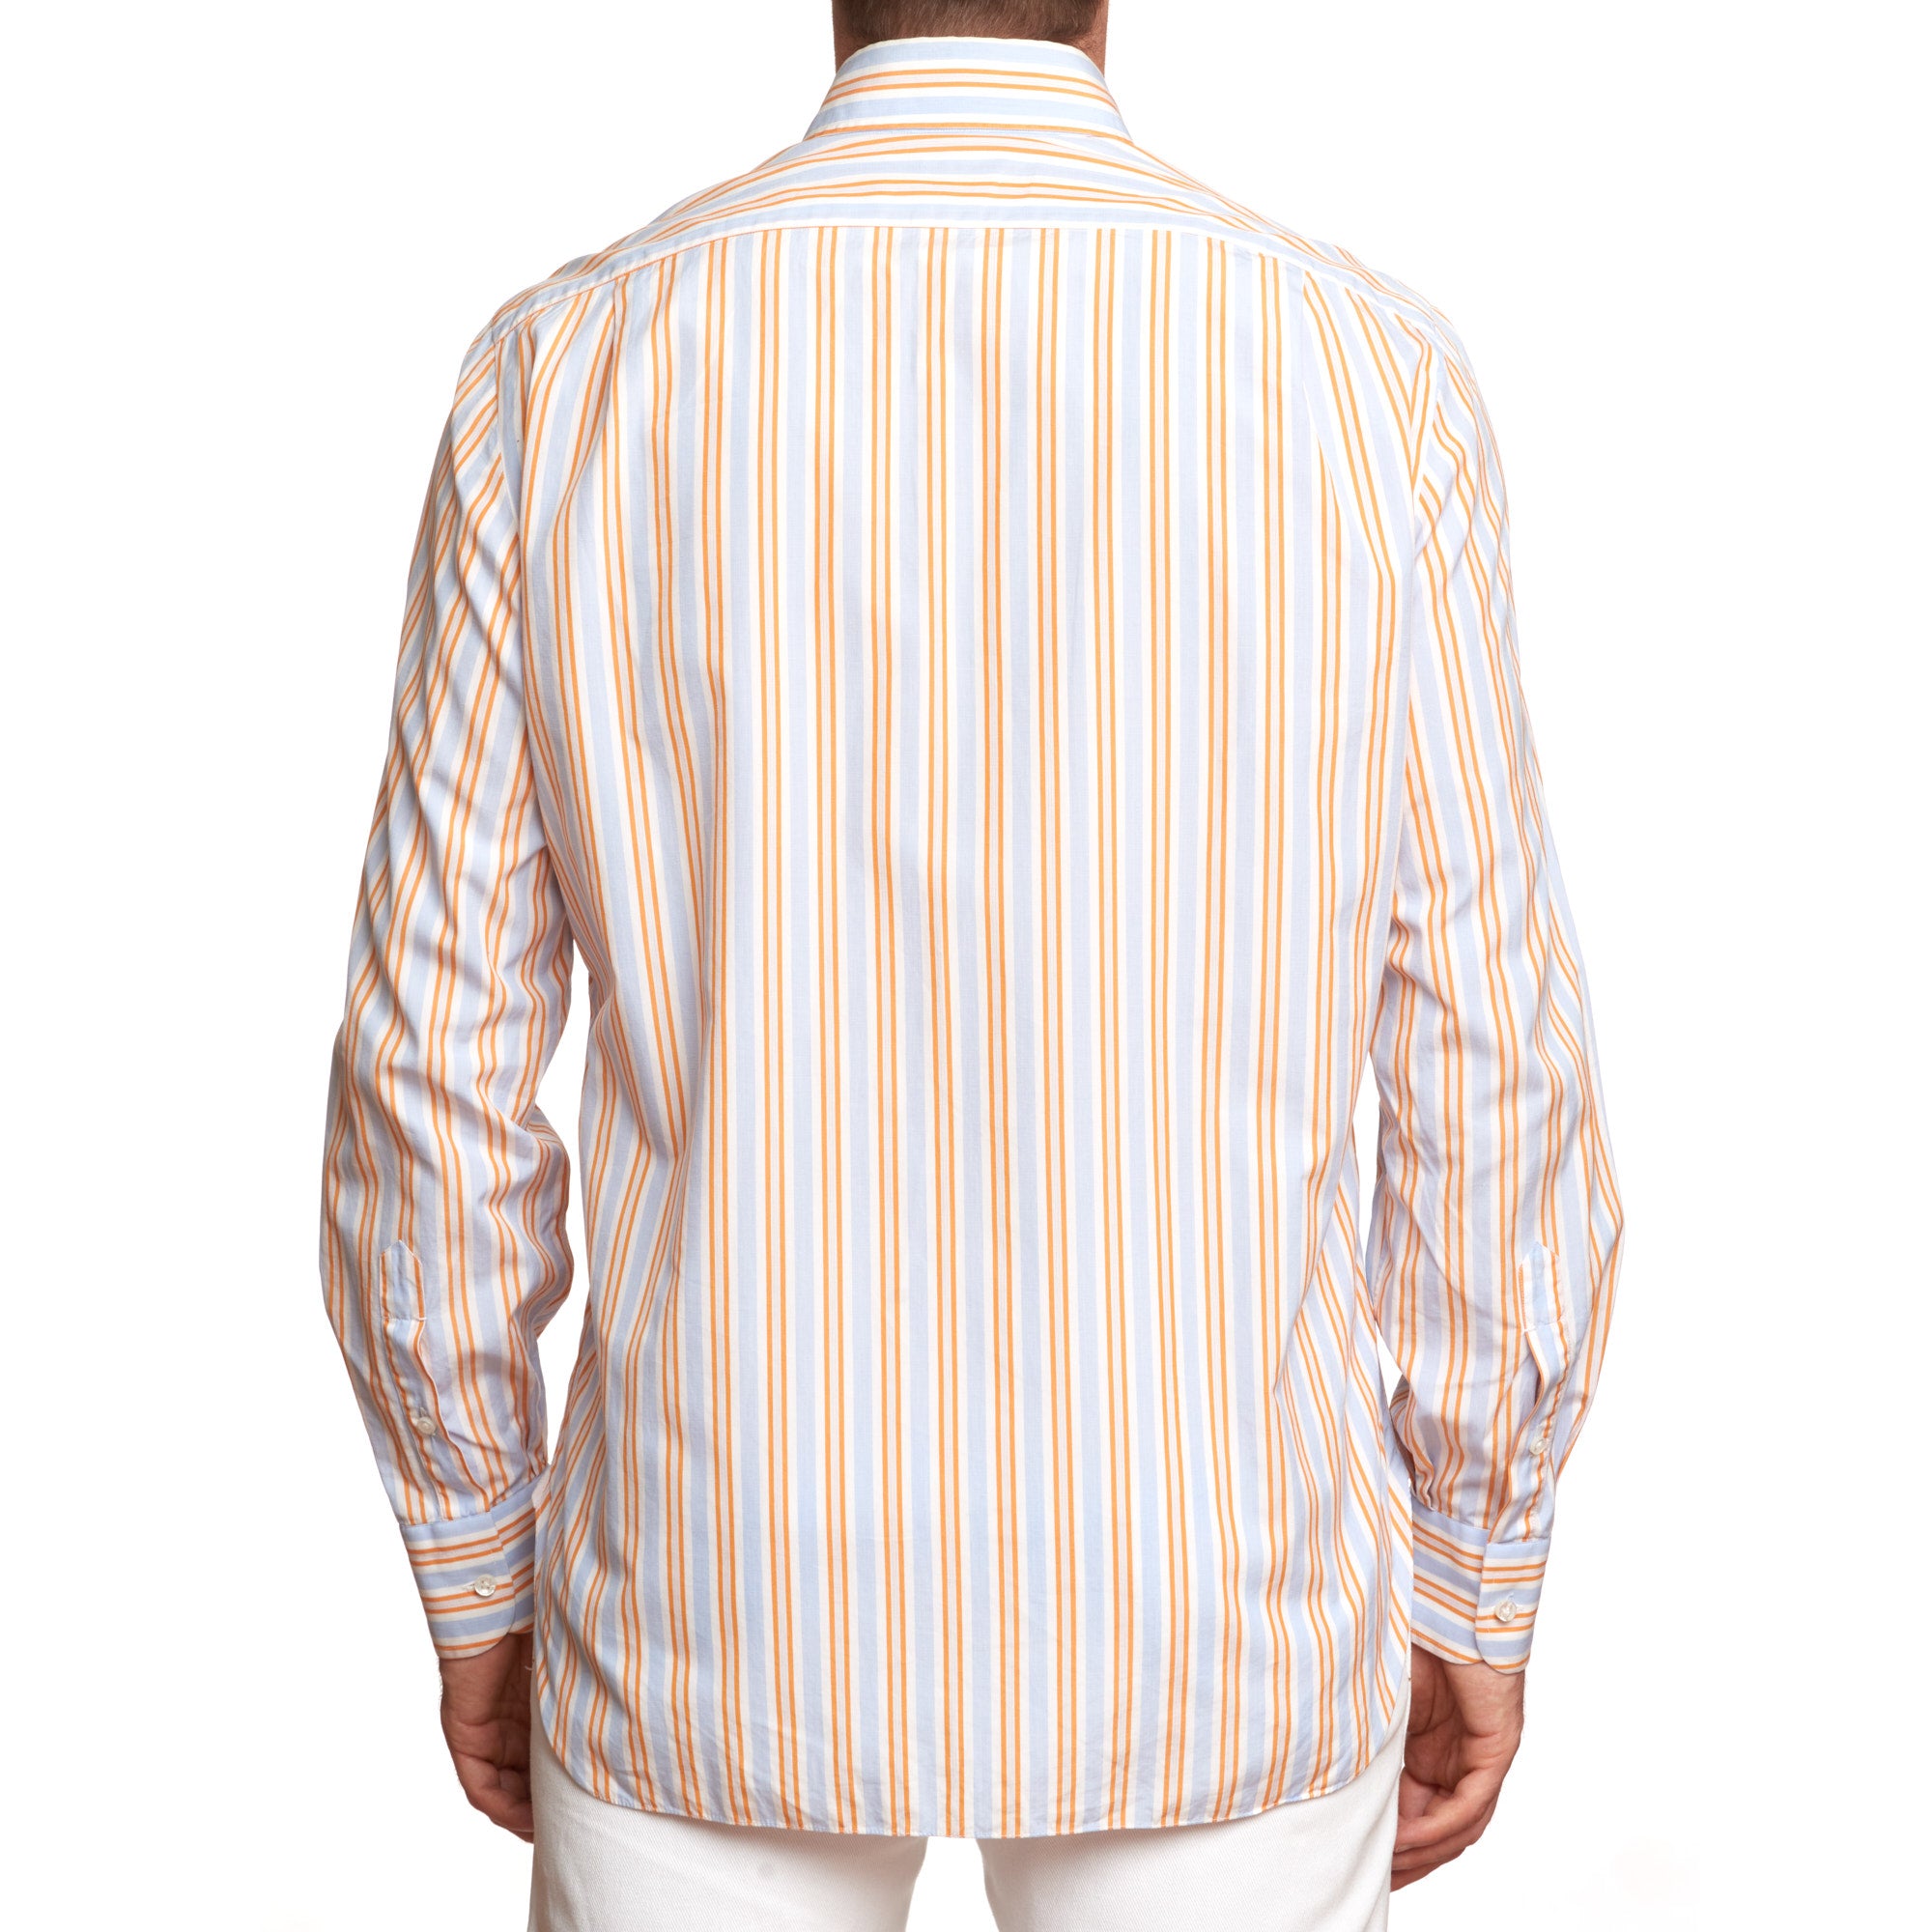 BARBA Handmade Multi-Color Striped Cotton Button-Down Shirt EU 40 US 15.75 BARBA